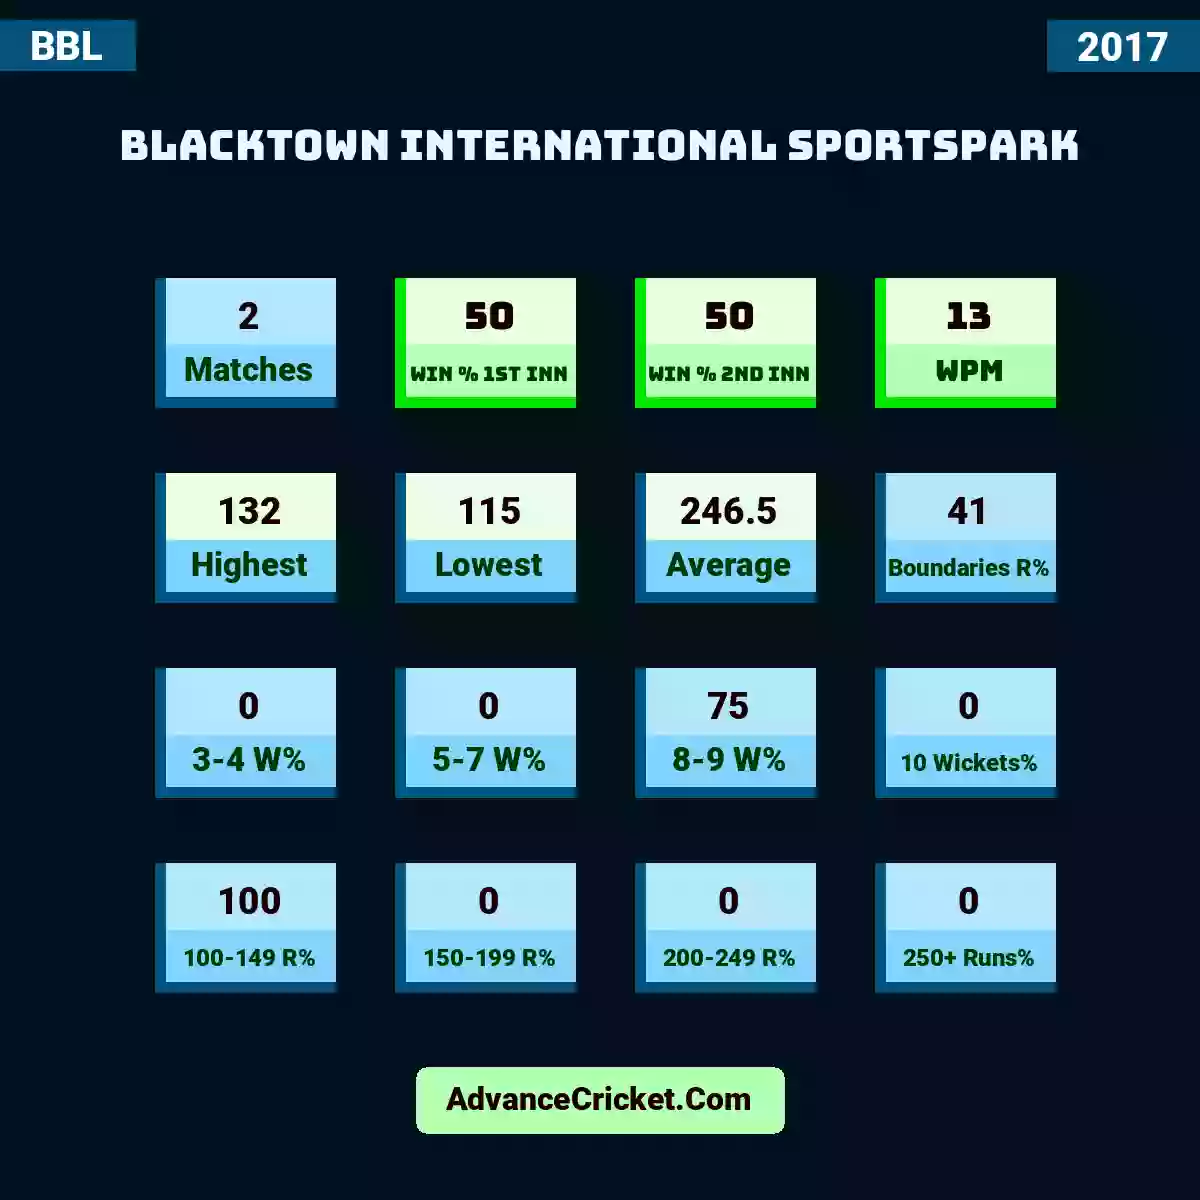 Image showing Blacktown International Sportspark with Matches: 2, Win % 1st Inn: 50, Win % 2nd Inn: 50, WPM: 13, Highest: 132, Lowest: 115, Average: 246.5, Boundaries R%: 41, 3-4 W%: 0, 5-7 W%: 0, 8-9 W%: 75, 10 Wickets%: 0, 100-149 R%: 100, 150-199 R%: 0, 200-249 R%: 0, 250+ Runs%: 0.